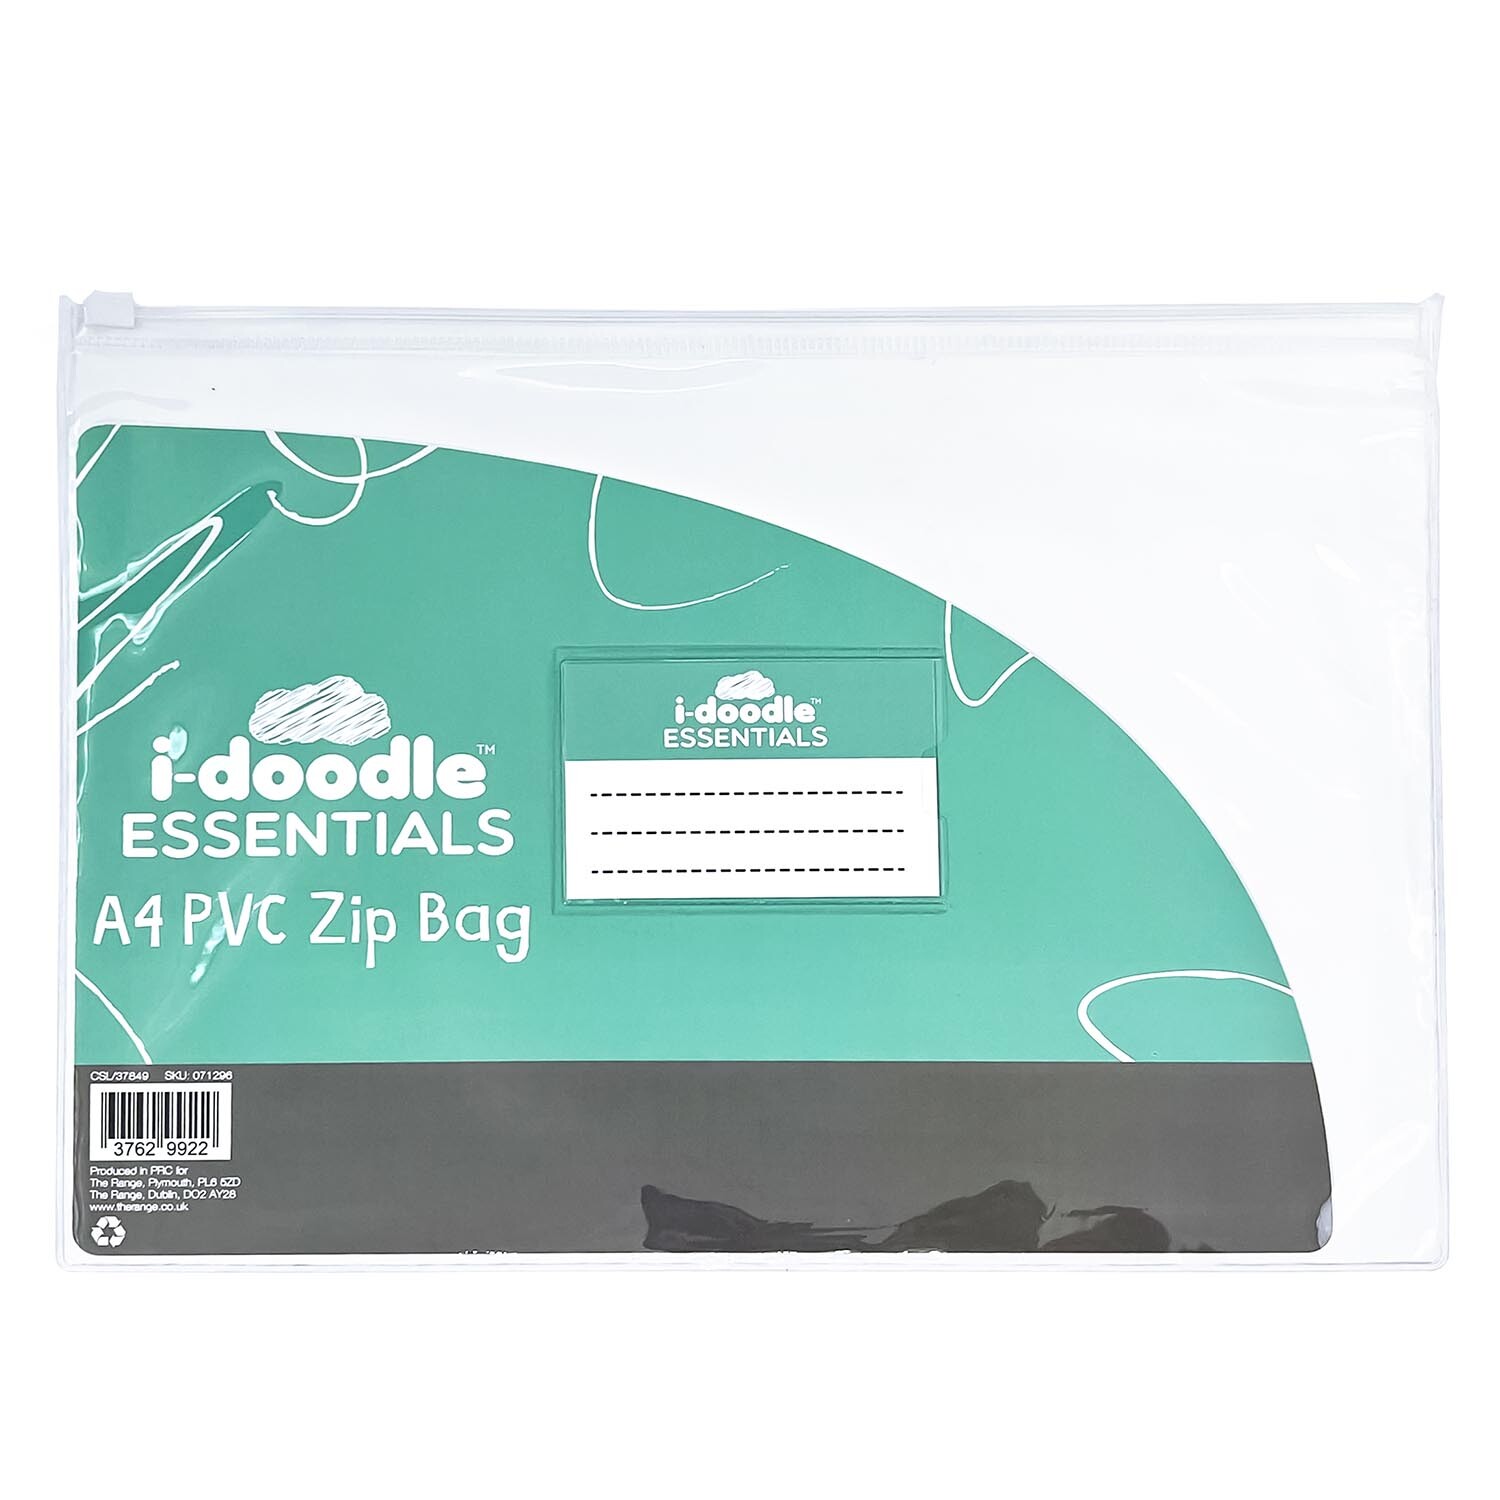 PVC Zip Bag - A4 Image